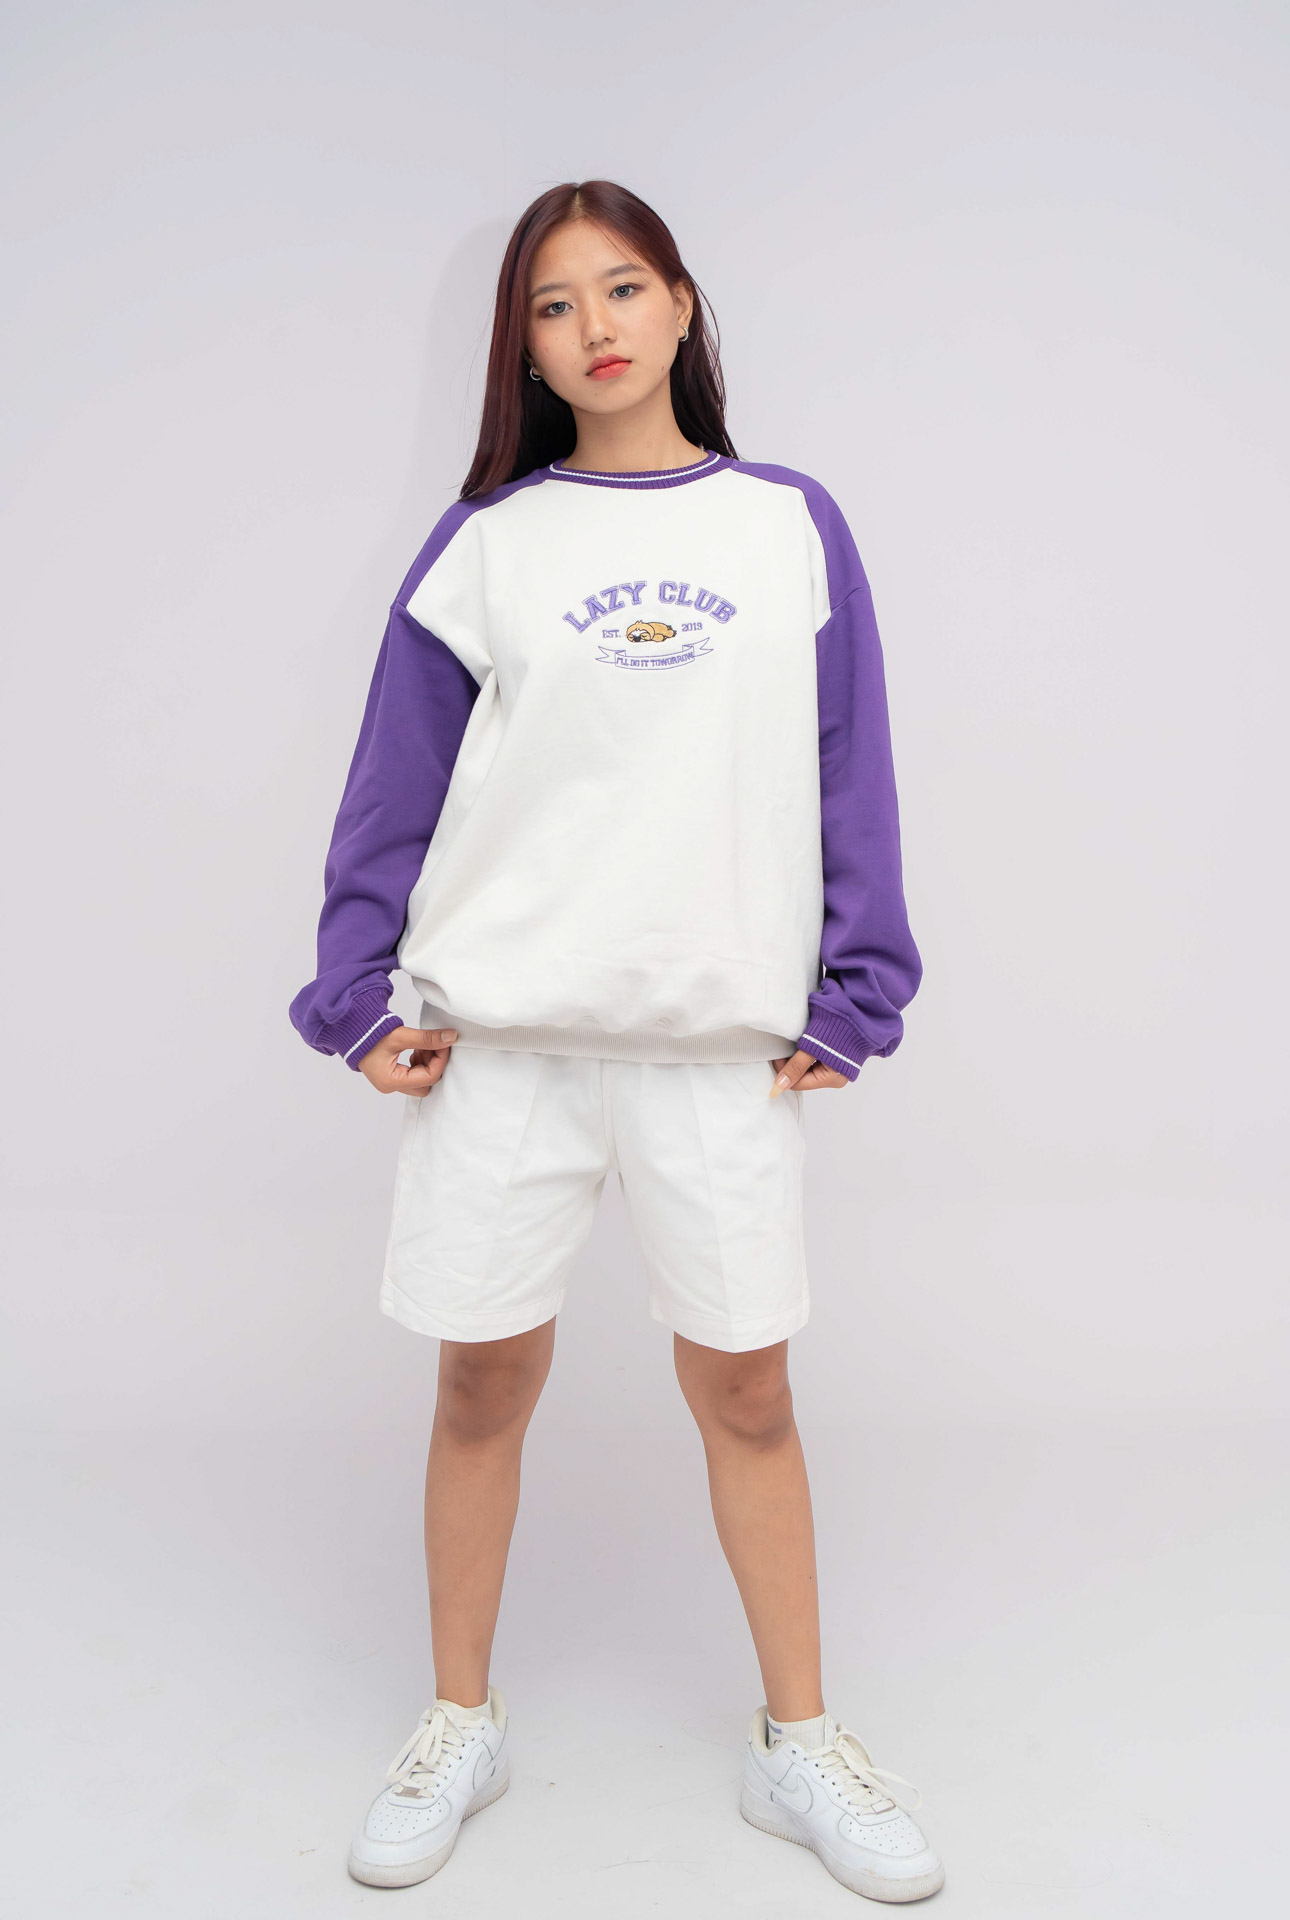 Lazy Club Embroidered  Purple Sweatshirt